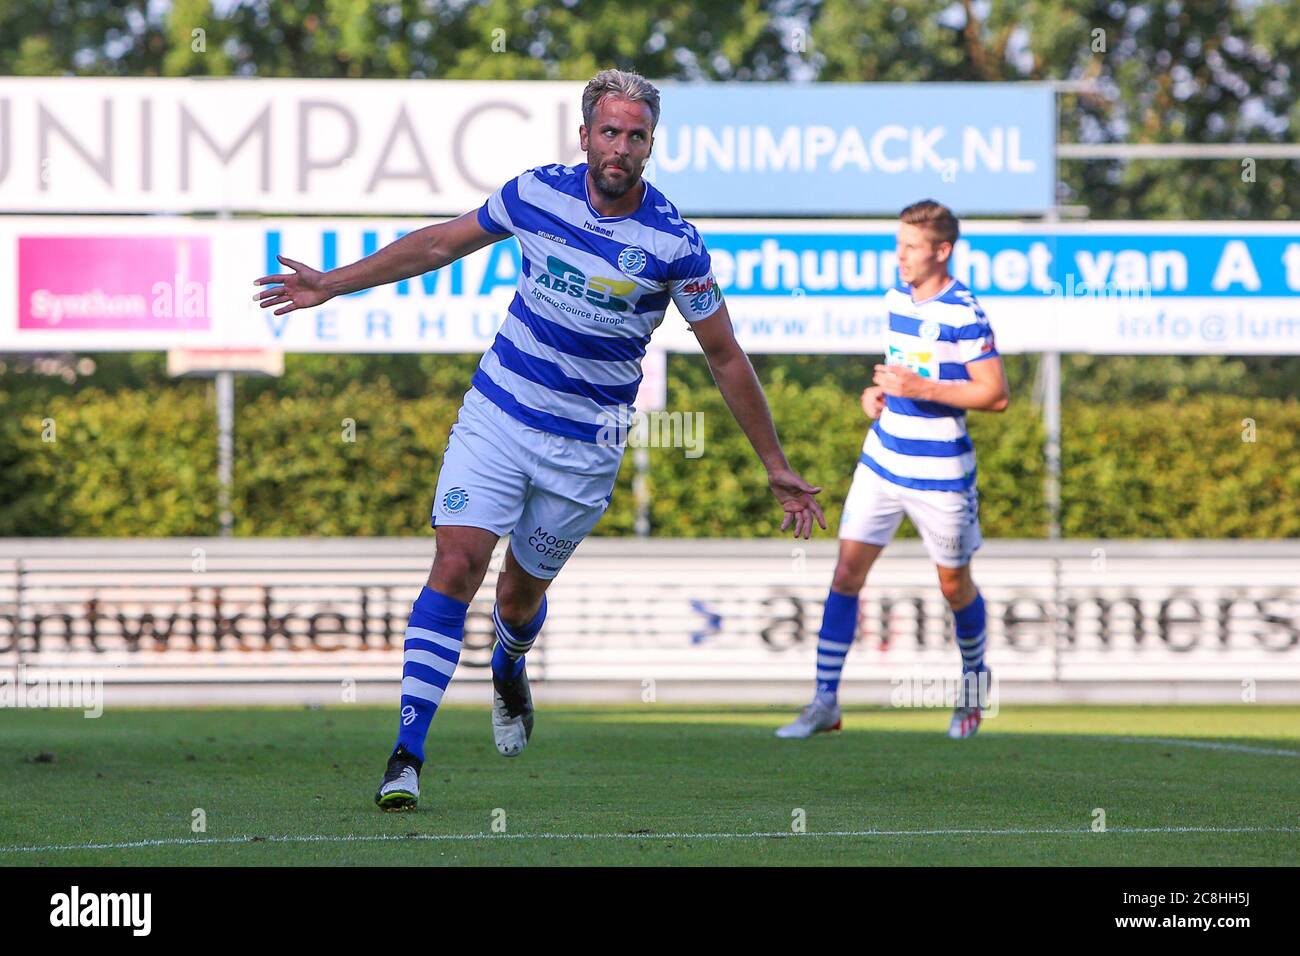 GROESBEEK, PAYS-BAS - JUILLET 21: Ralf Seuntjens de Graafschap célèbre un but vu pendant le match pré-saison de Treffers contre de Graafschap le 21 juillet 2020 à Groesbeek, pays-Bas. Banque D'Images